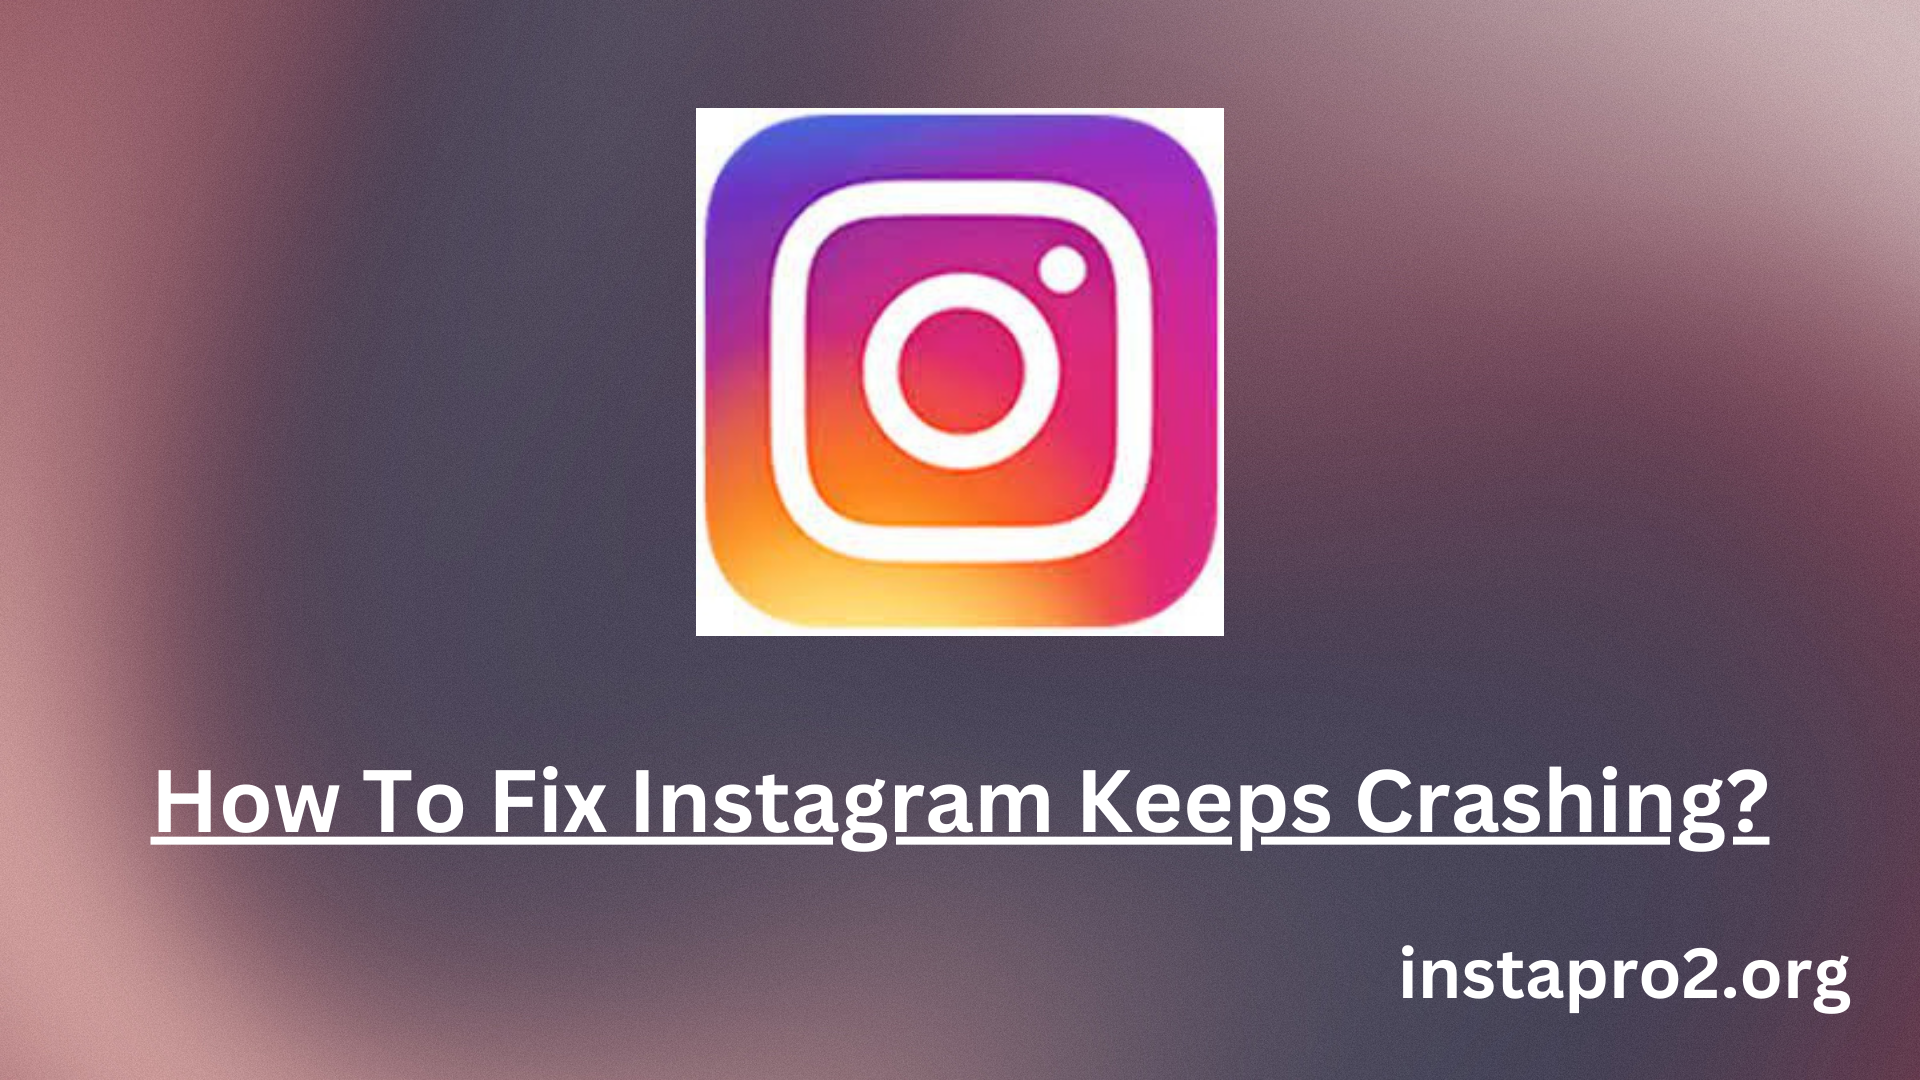 How To Fix Instagram Keeps Crashing?